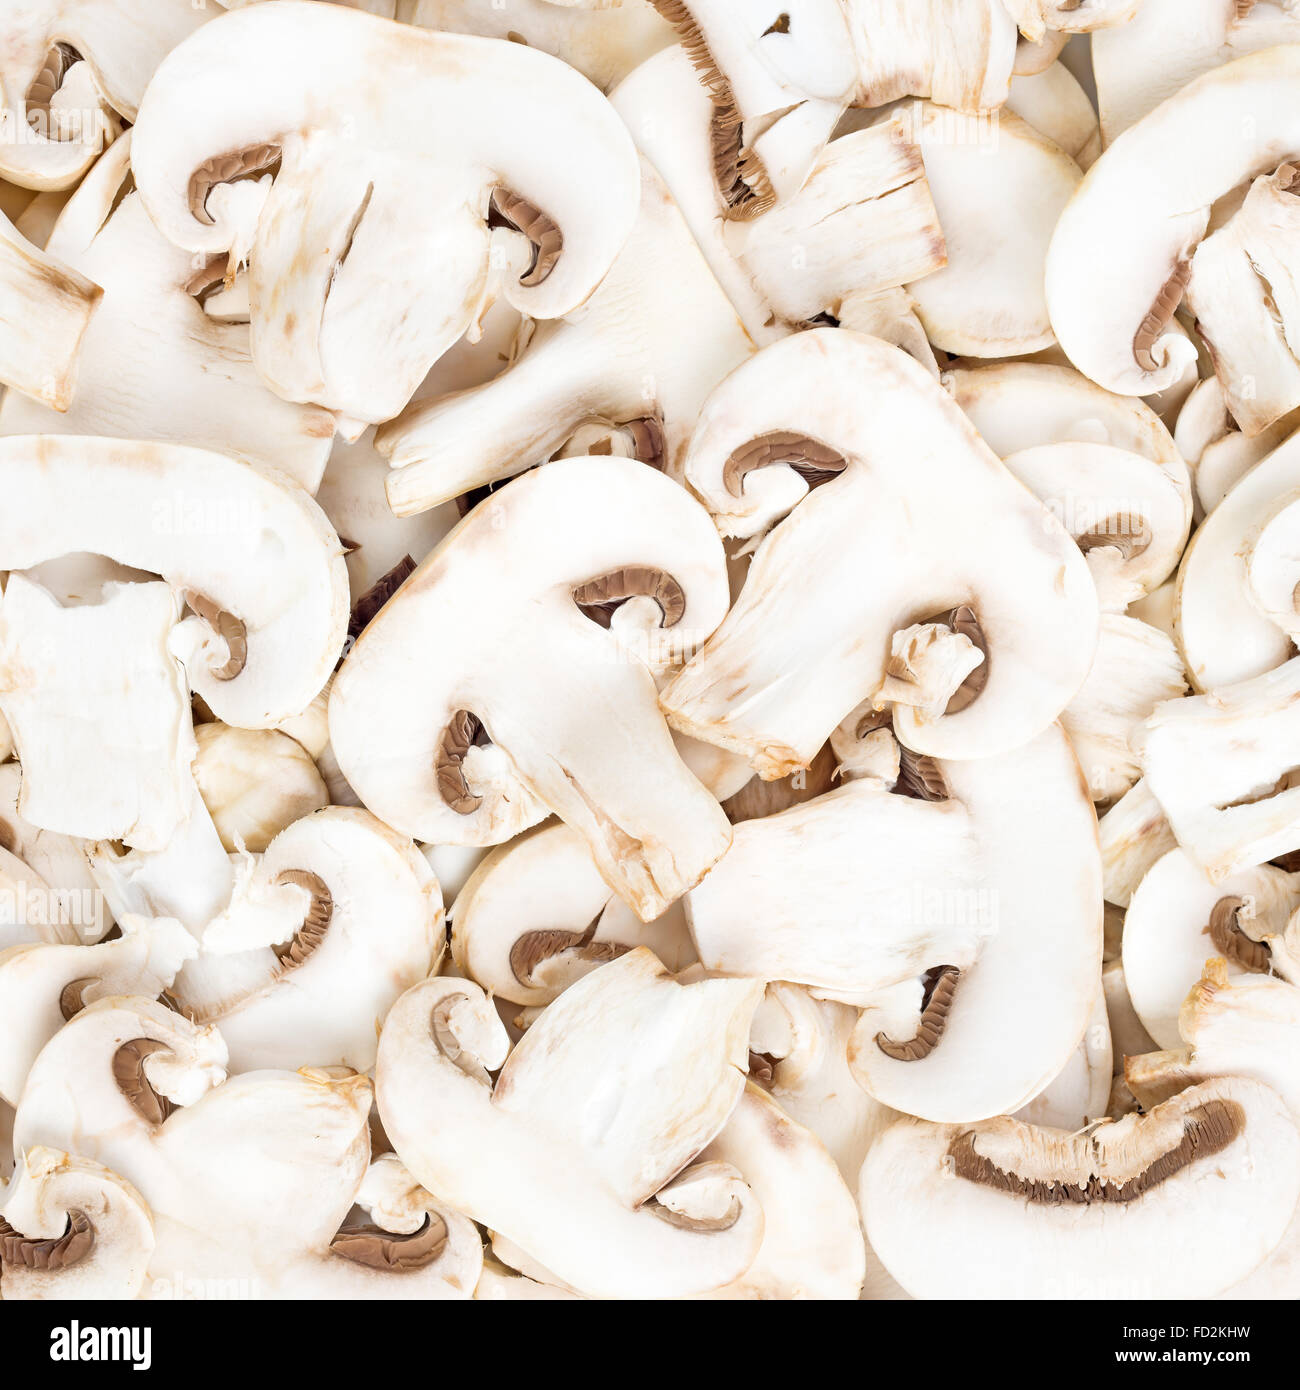 Champignon mushrooms sliced raw food pattern background Stock Photo